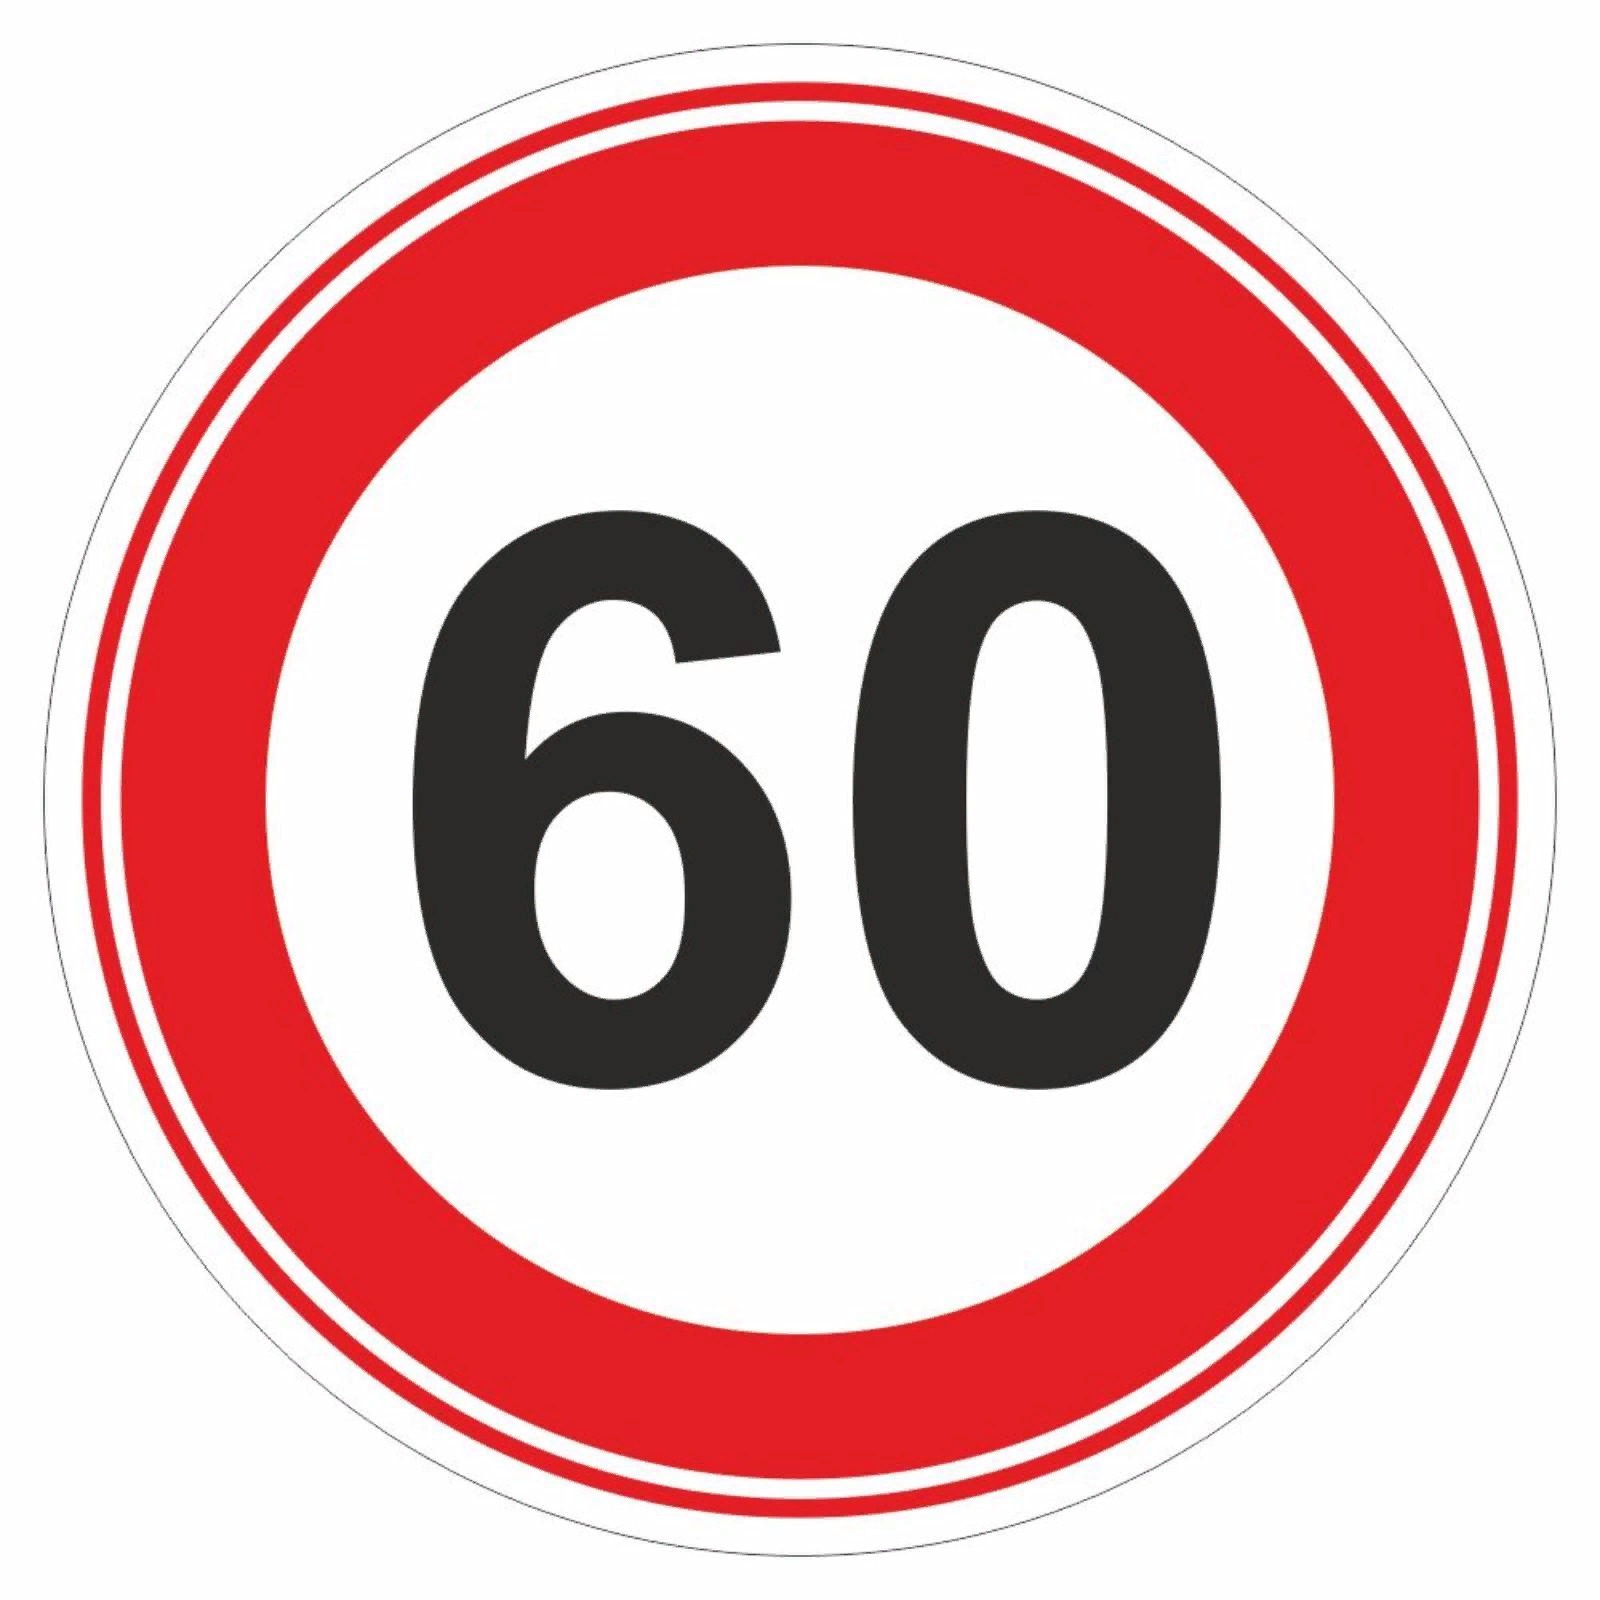 наклейка знак 60